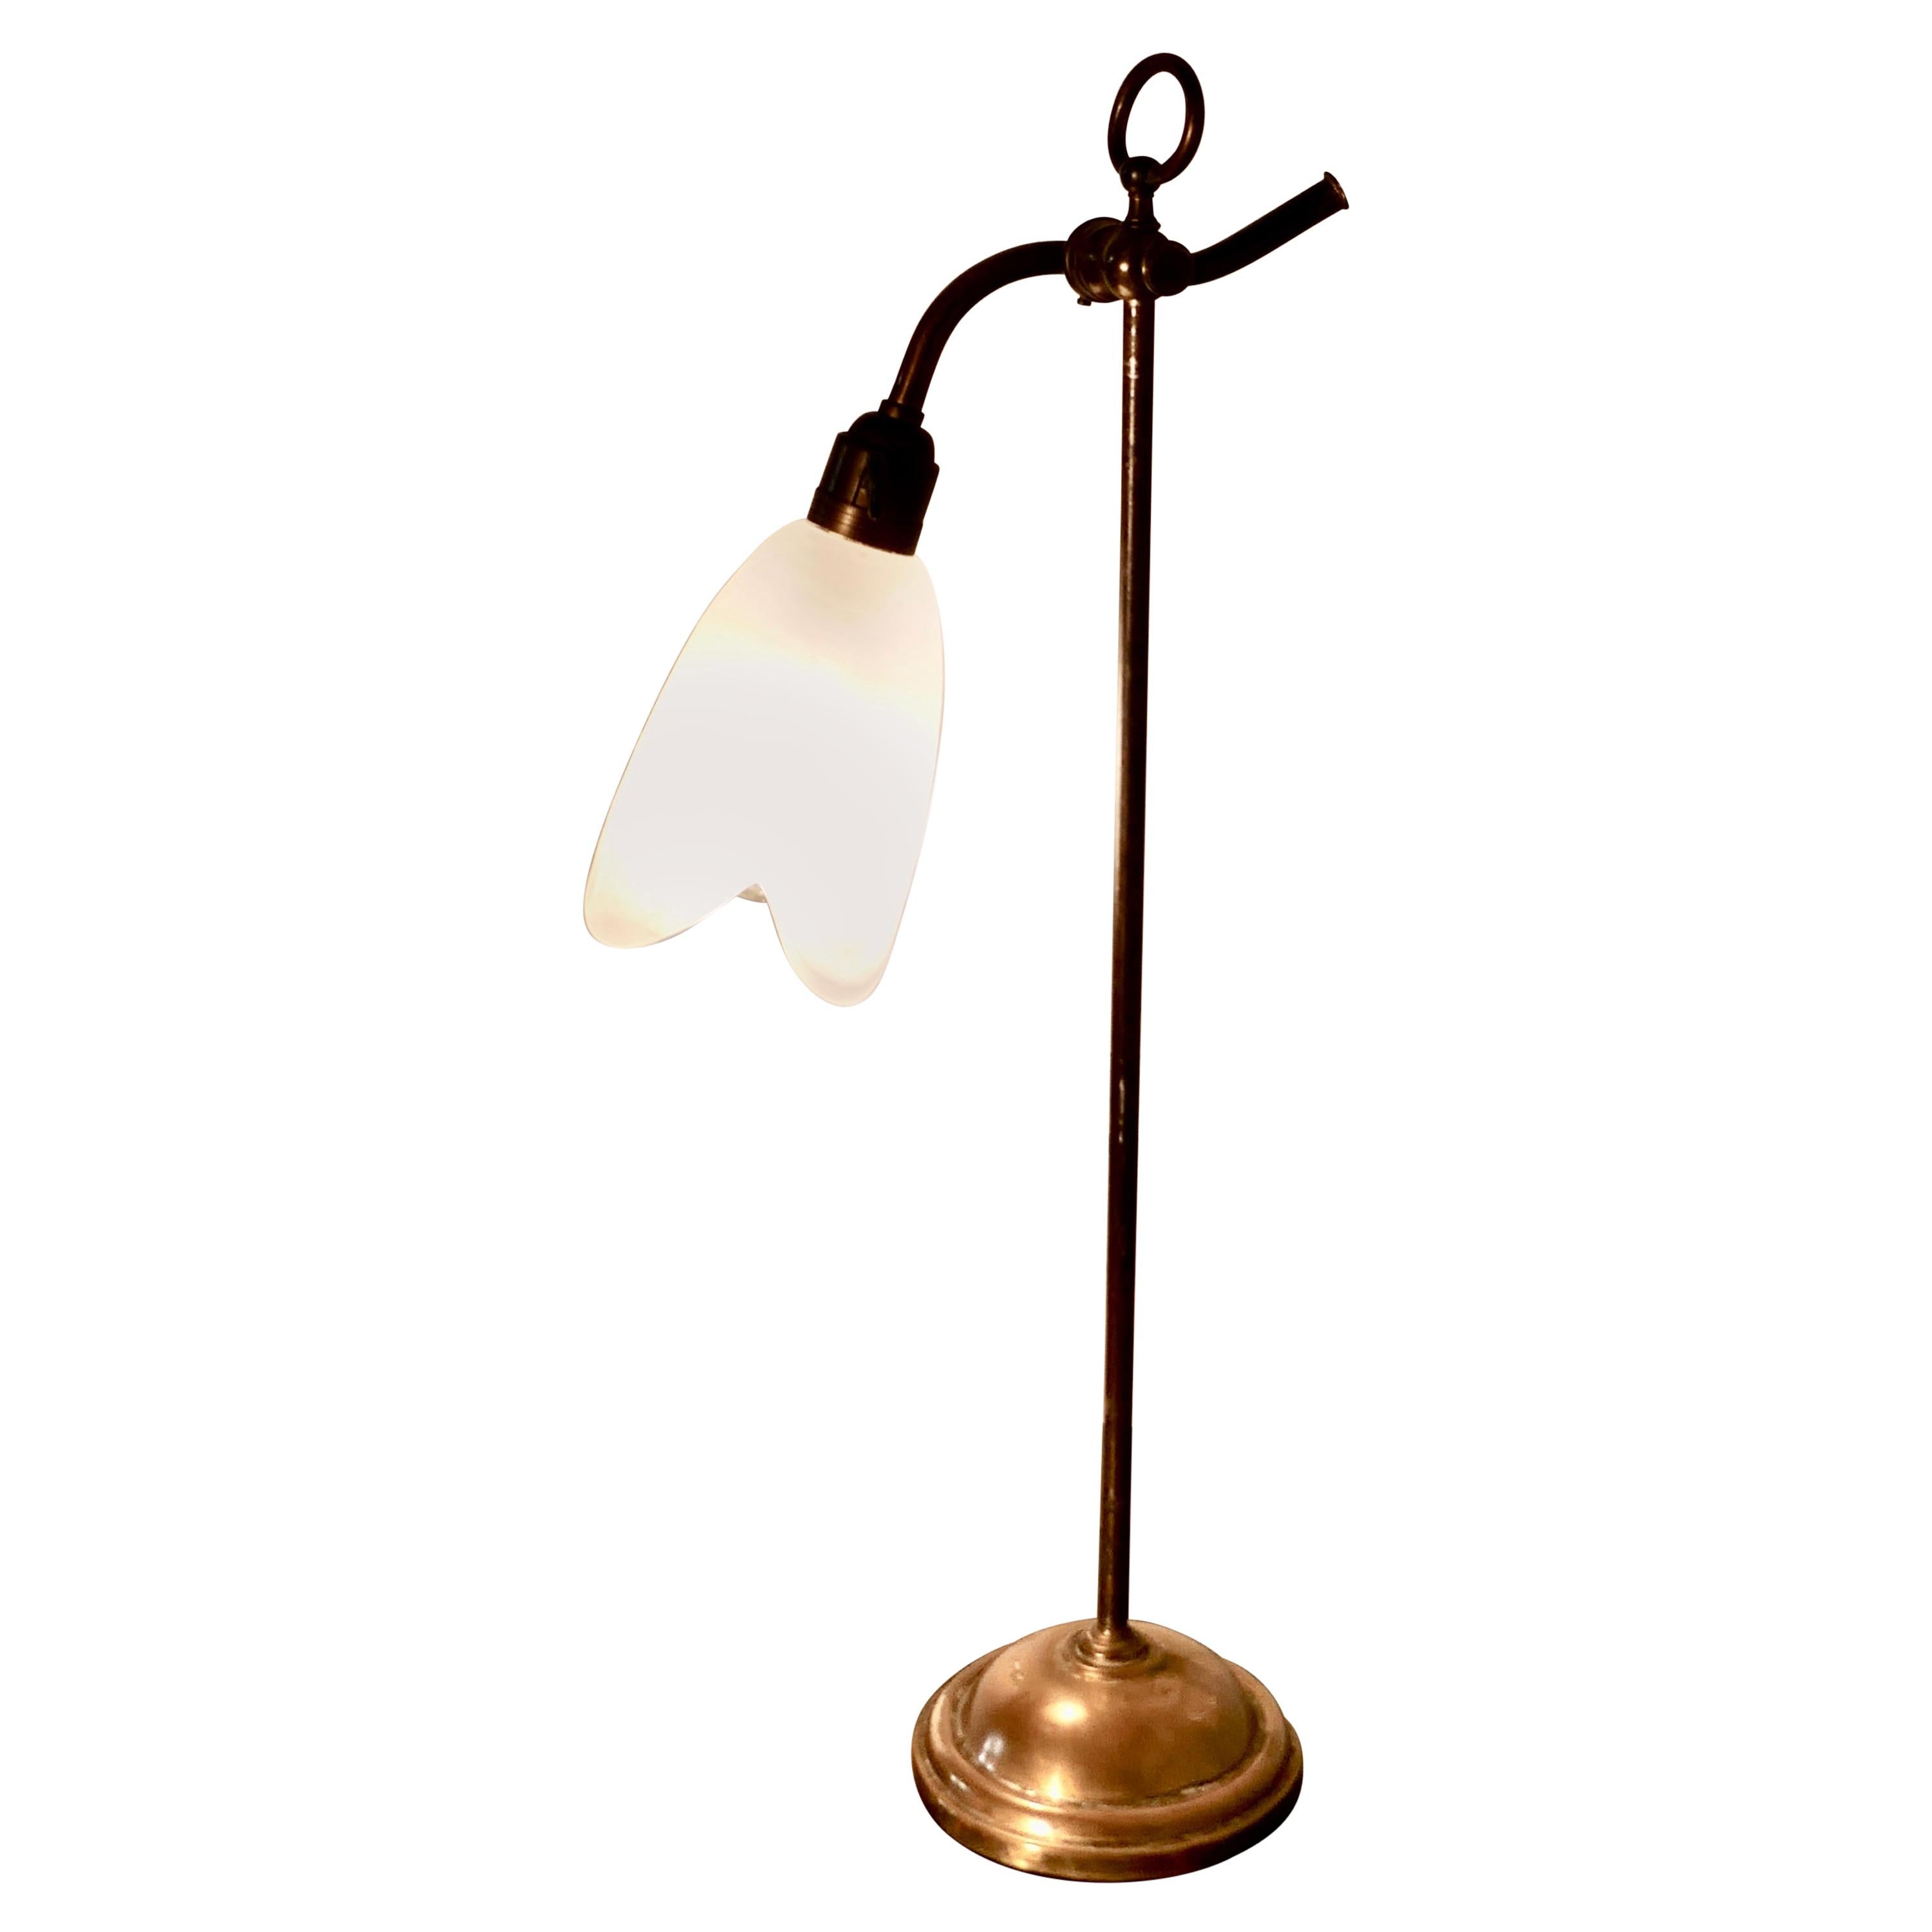 Victorian Brass Desk Lamp with Opaline Glass Shade